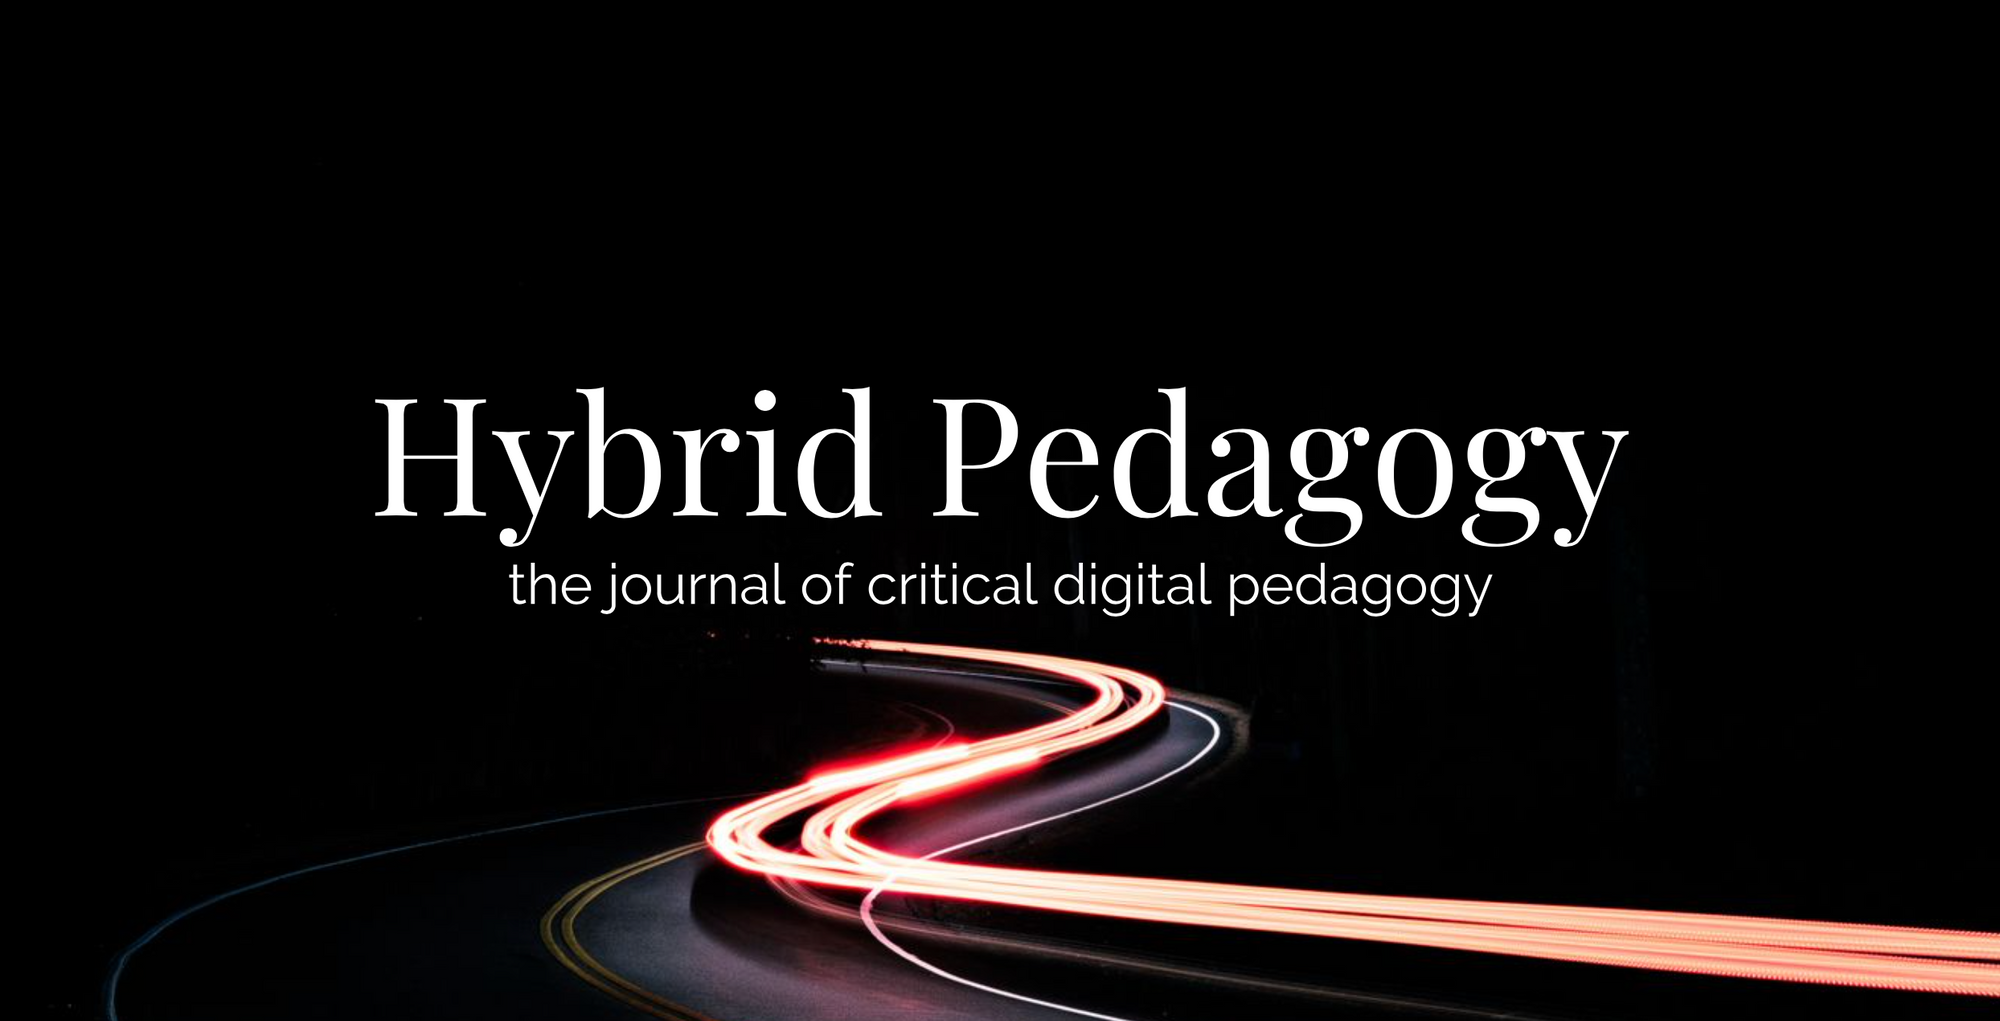 Hybrid Pedagogy: the journal of critical digital pedagogy